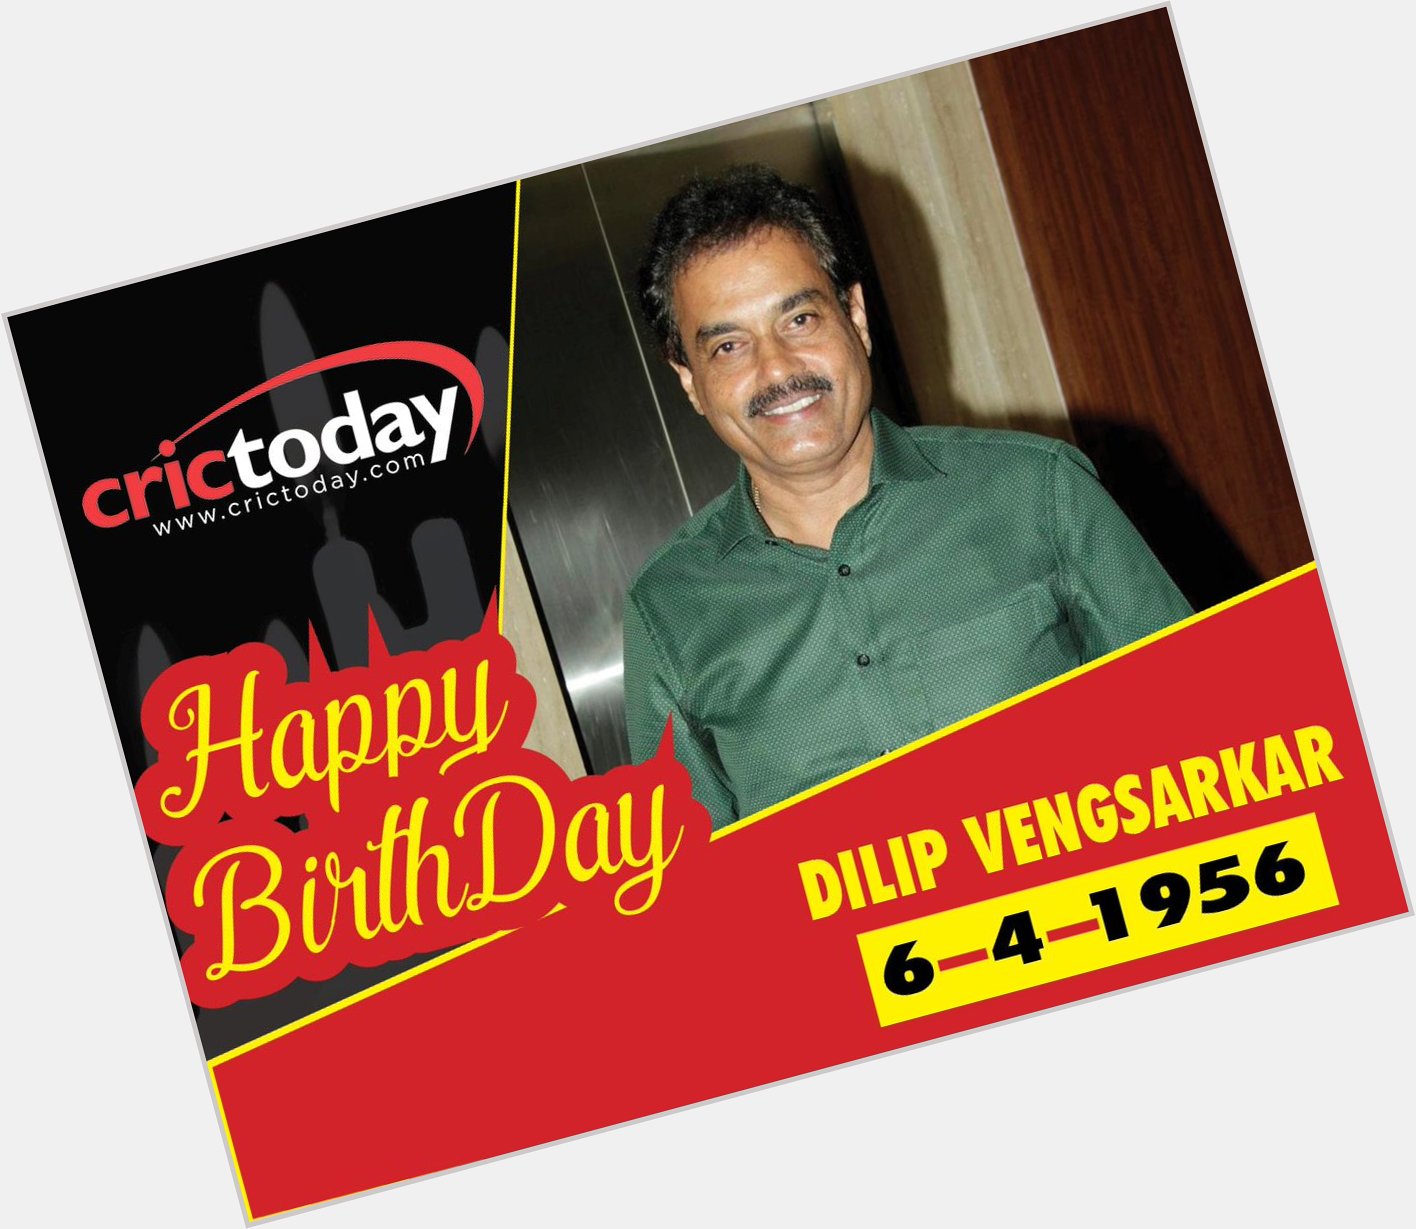  Happy Birthday Dilip Vengsarkar 